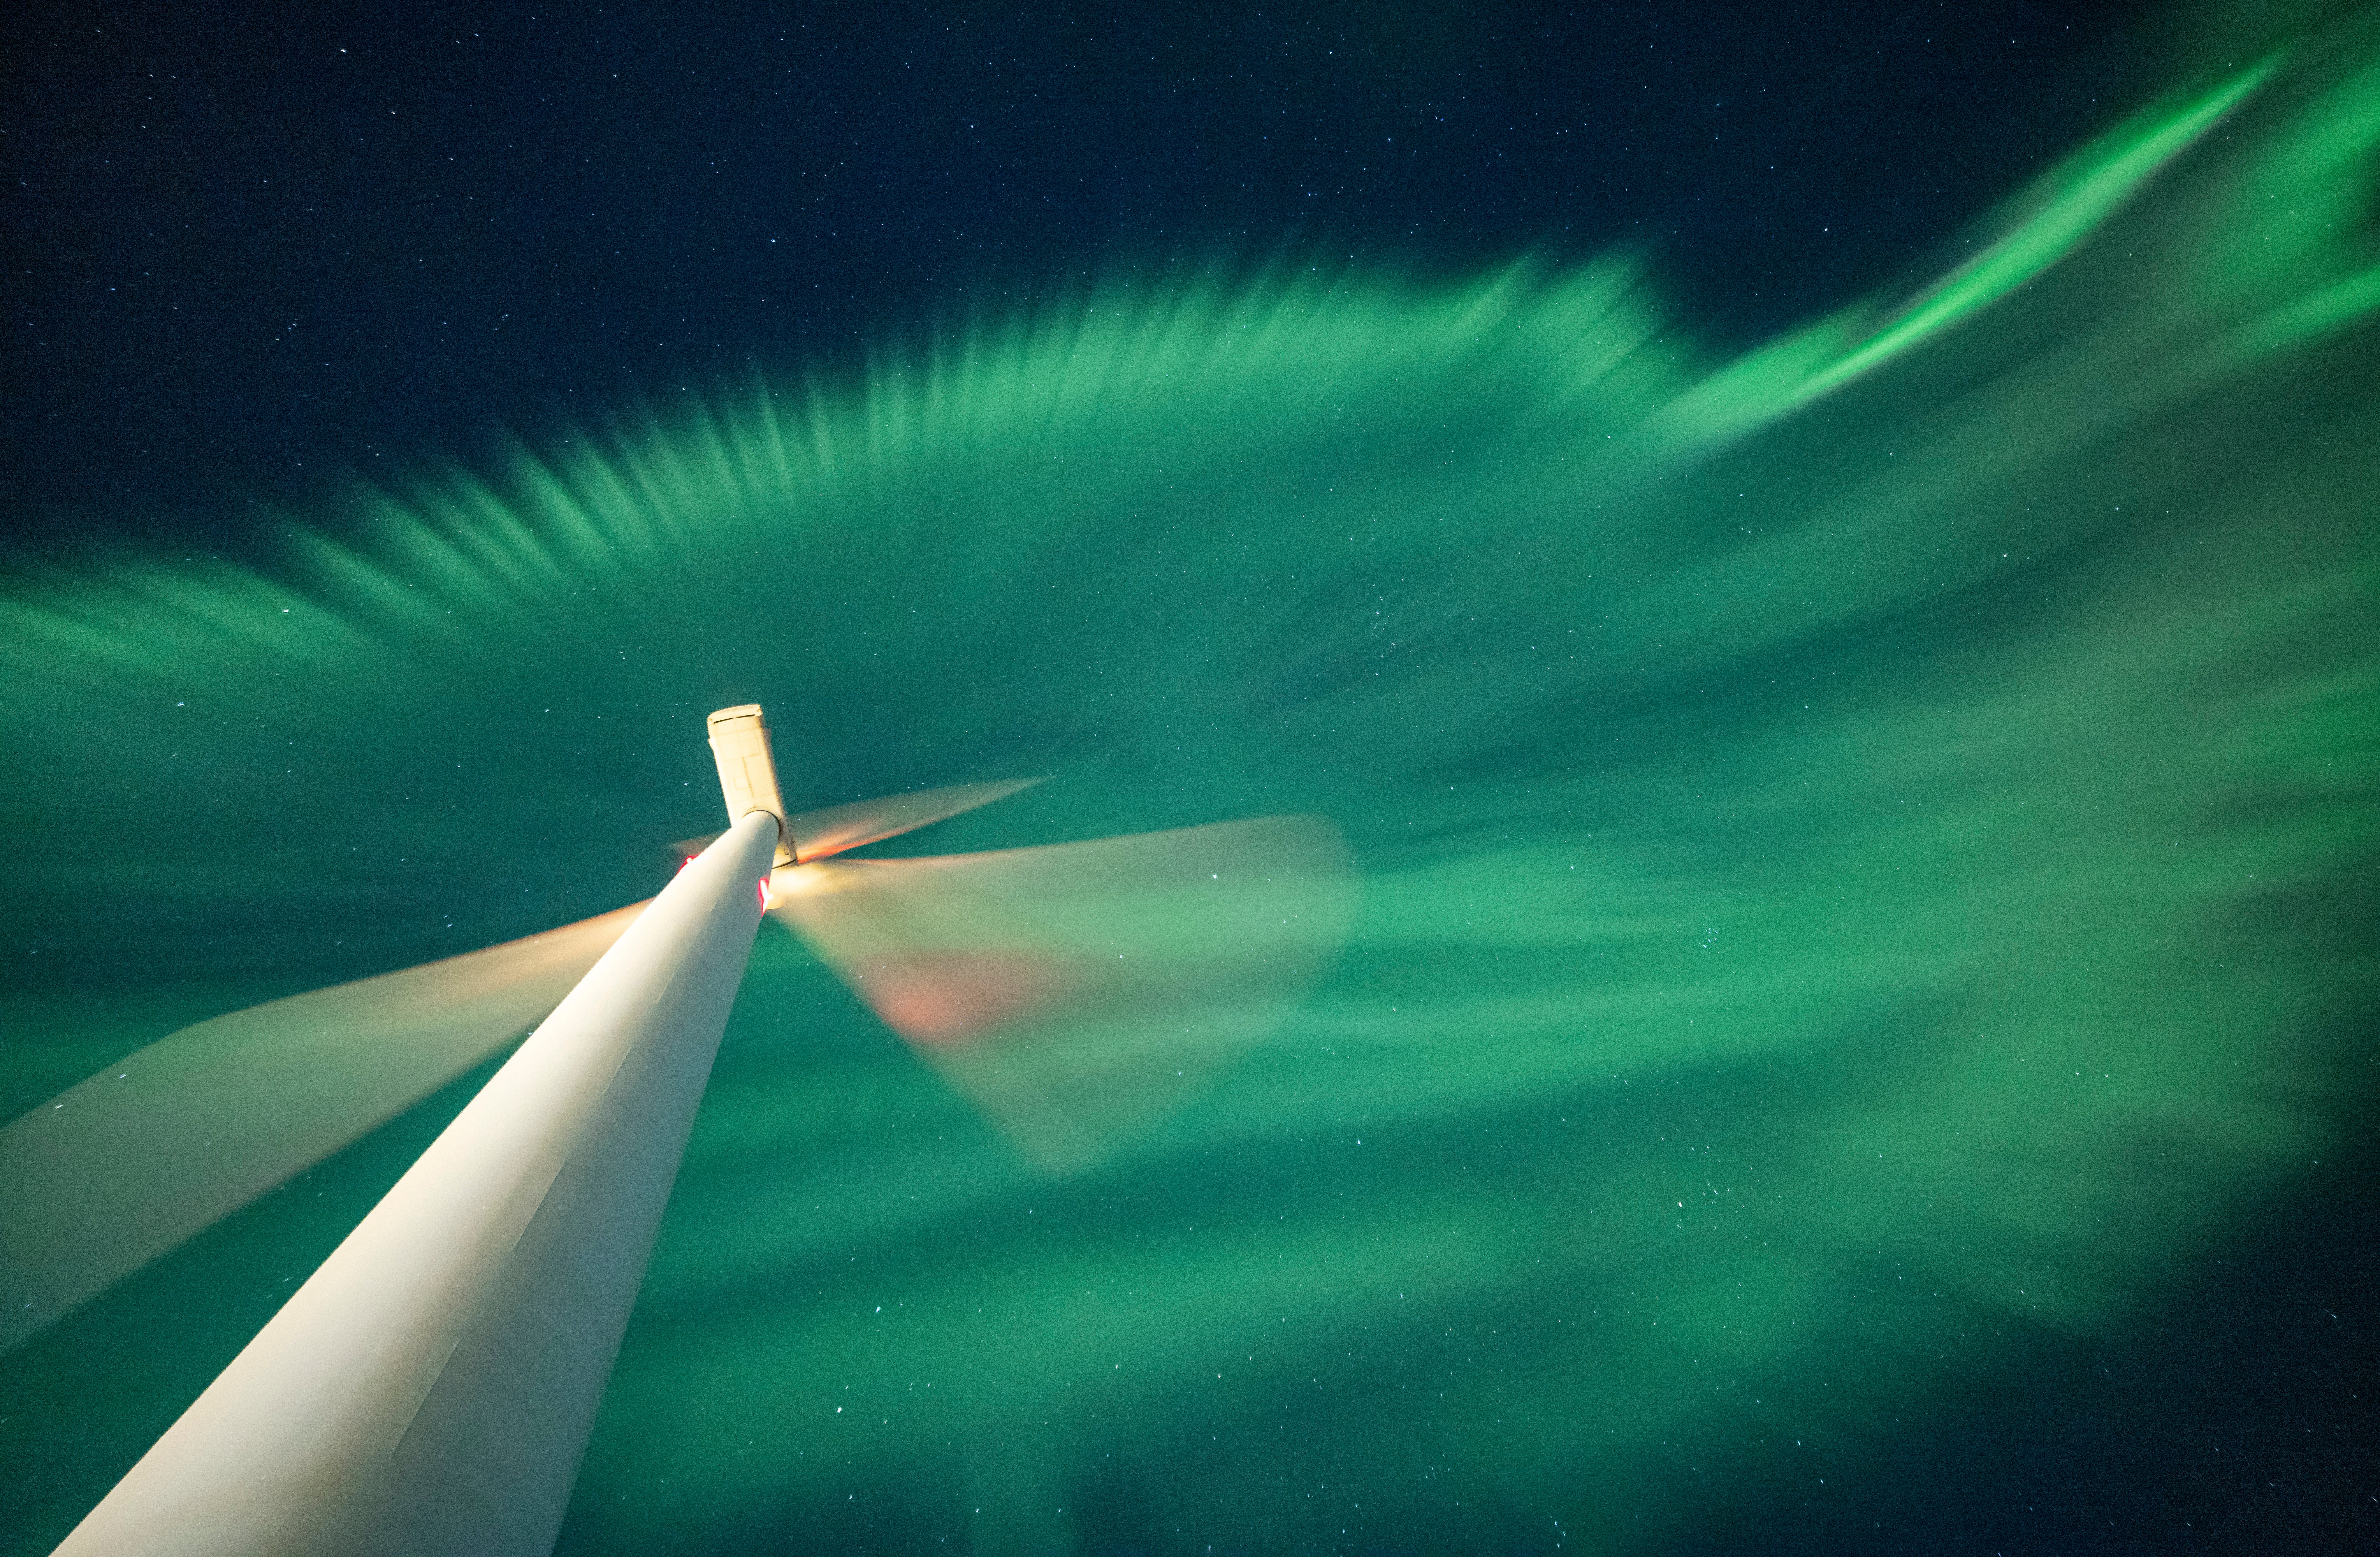 The aurora seen over a wind turbine in Finland. (Photo: © Esa Pekka Isomursu)